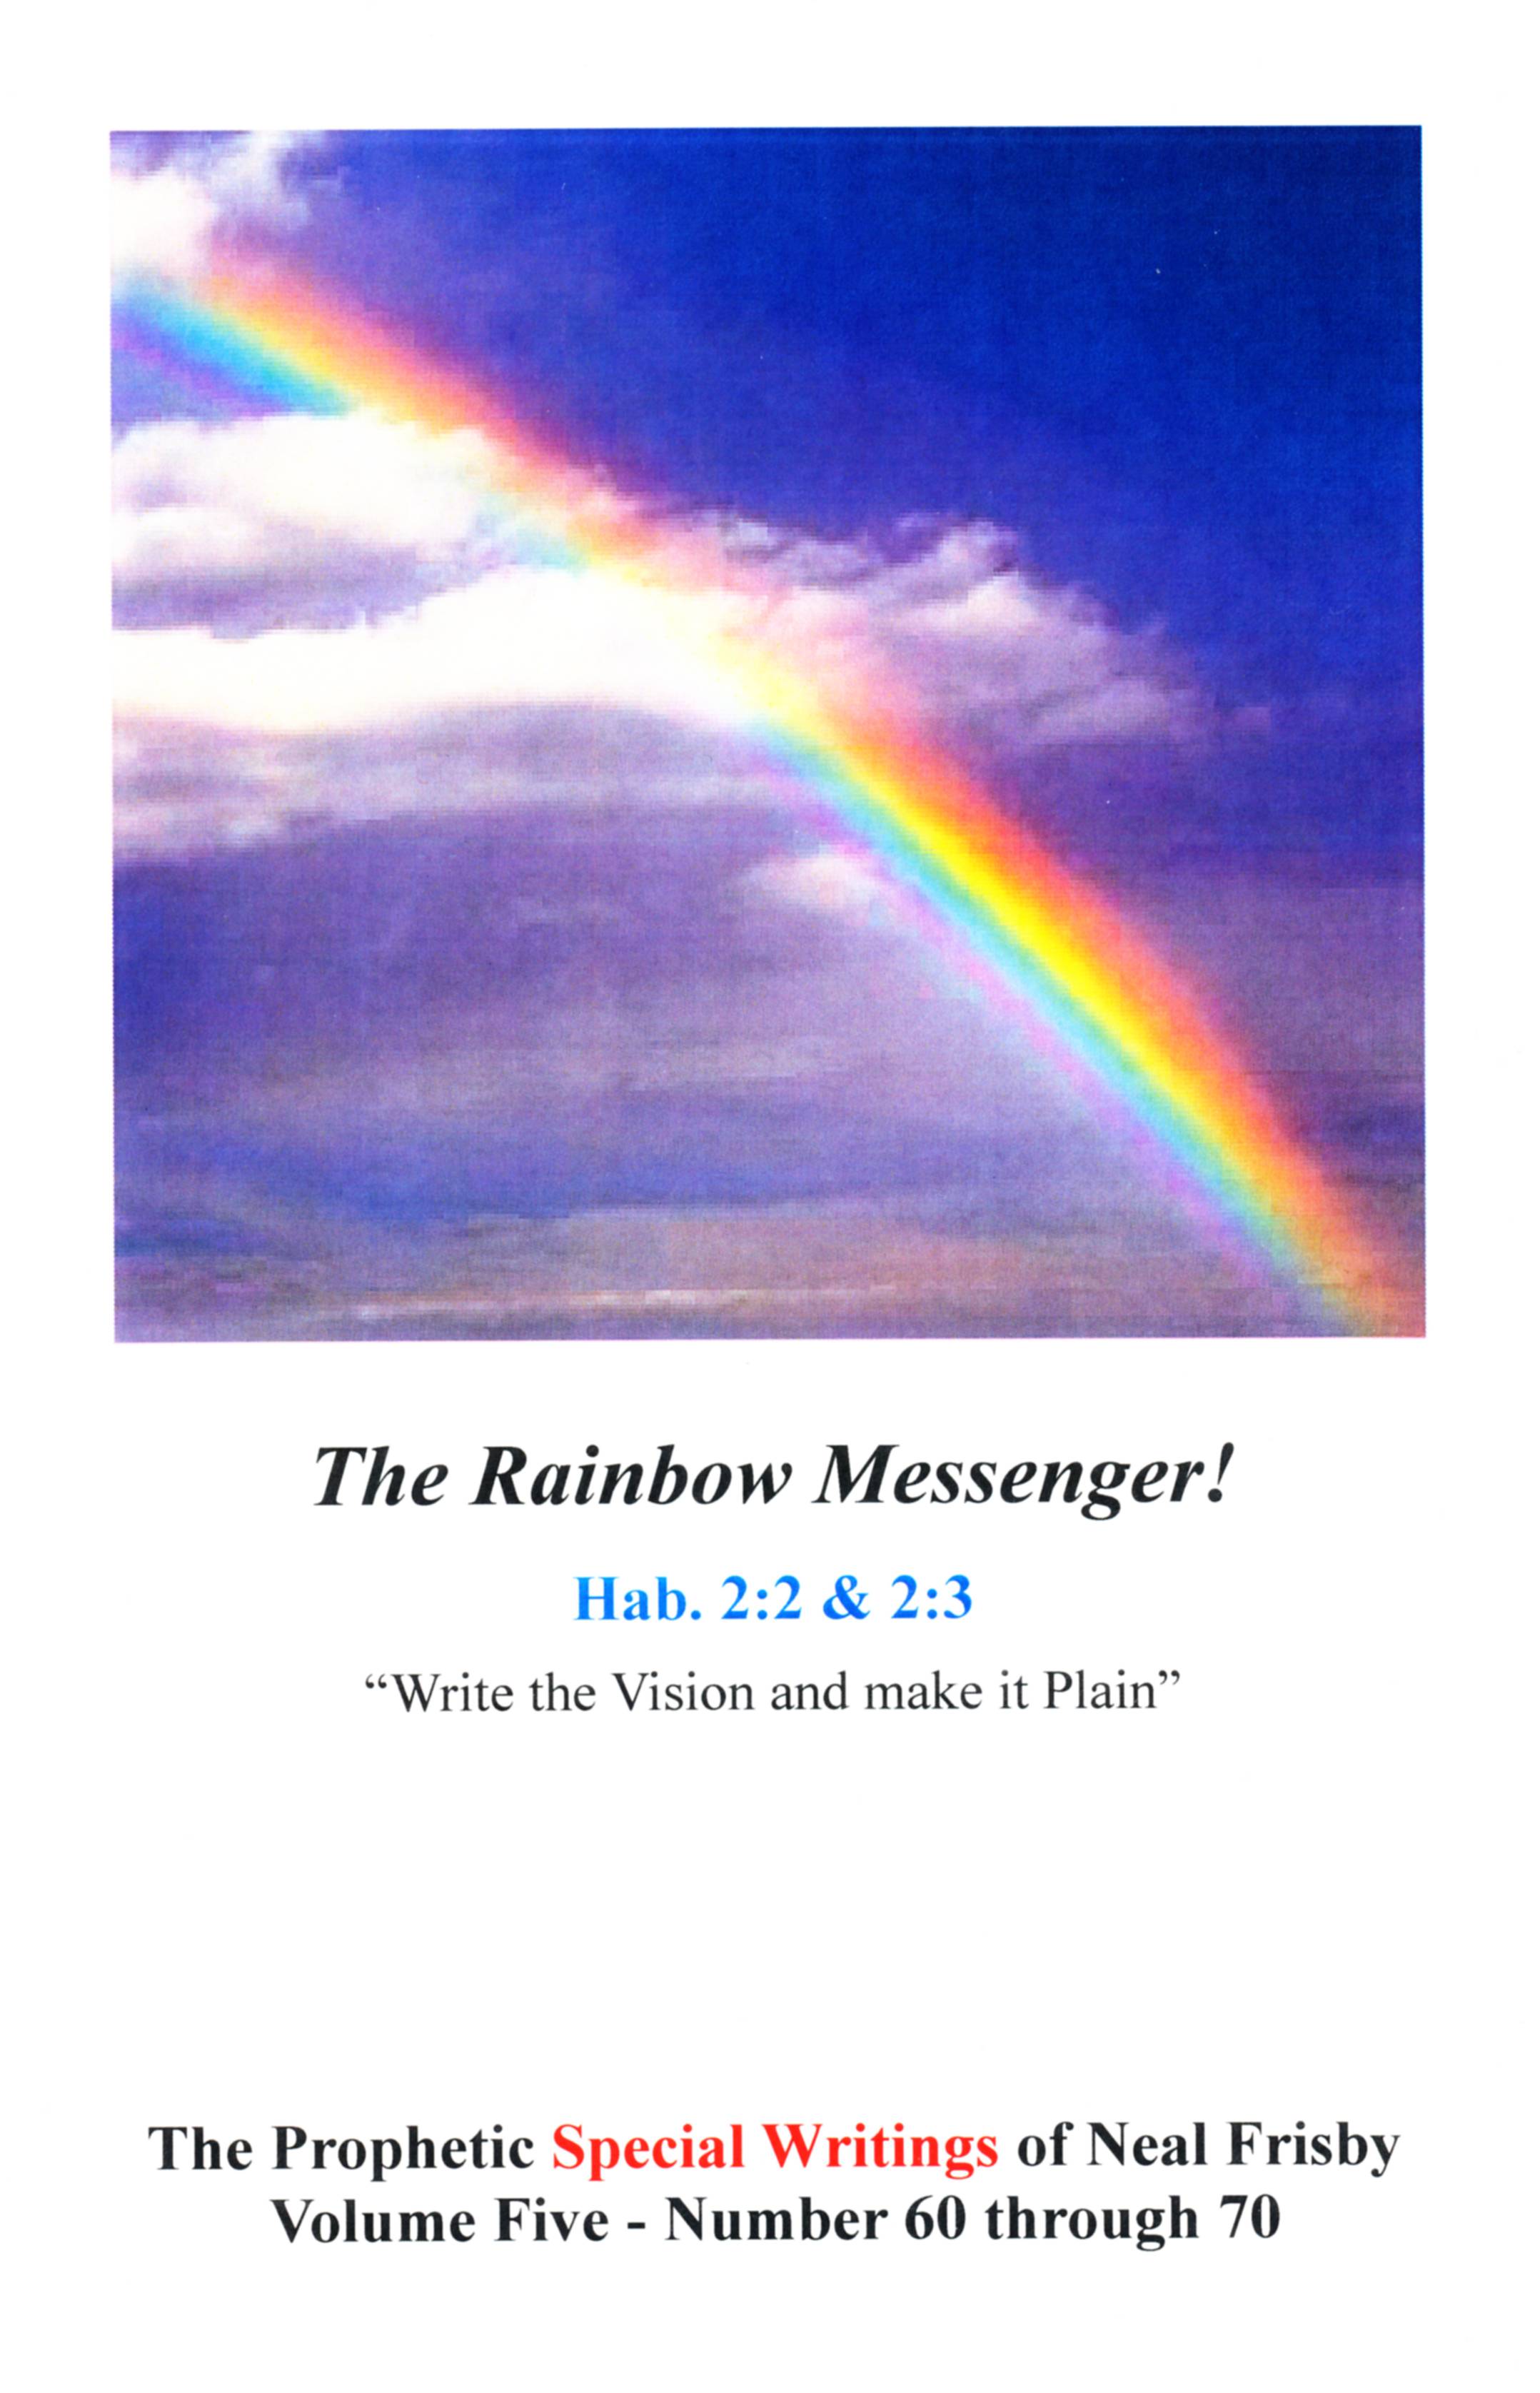 Volume 5 - The Rainbow Messenger!